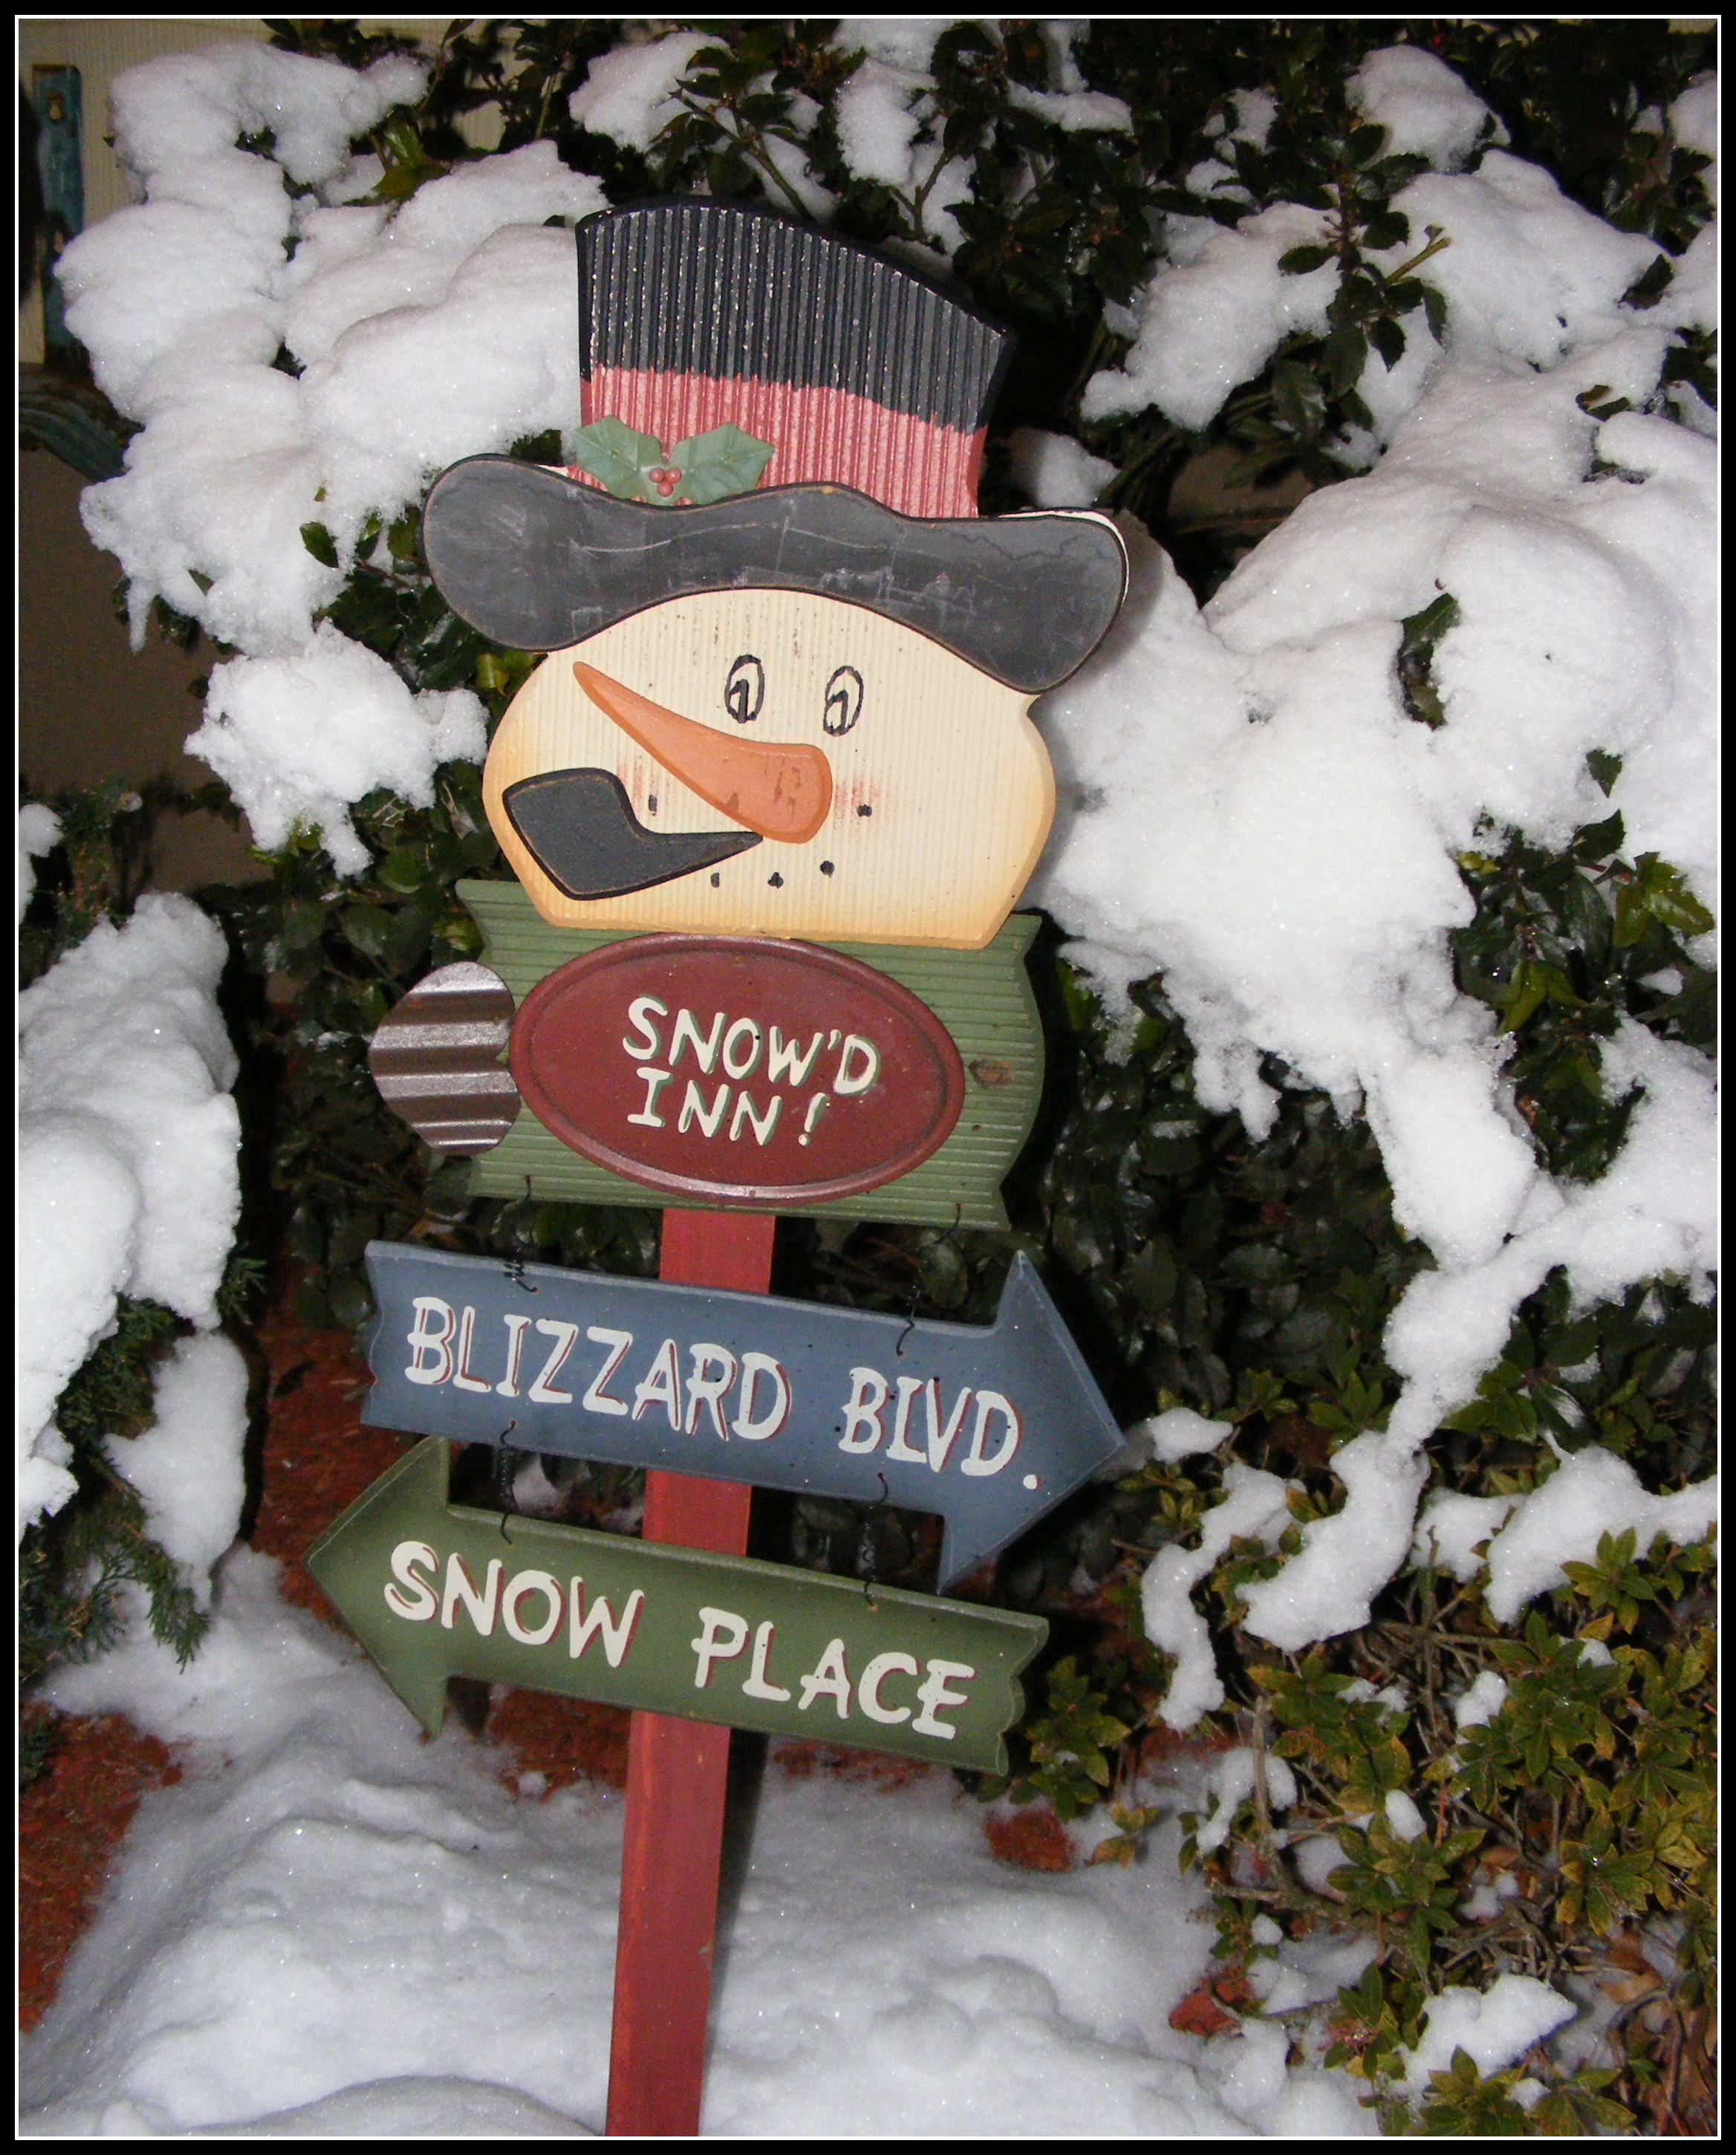 Lawn ornament, Blizzard Blvd, Snow Place, Snow'd Inn